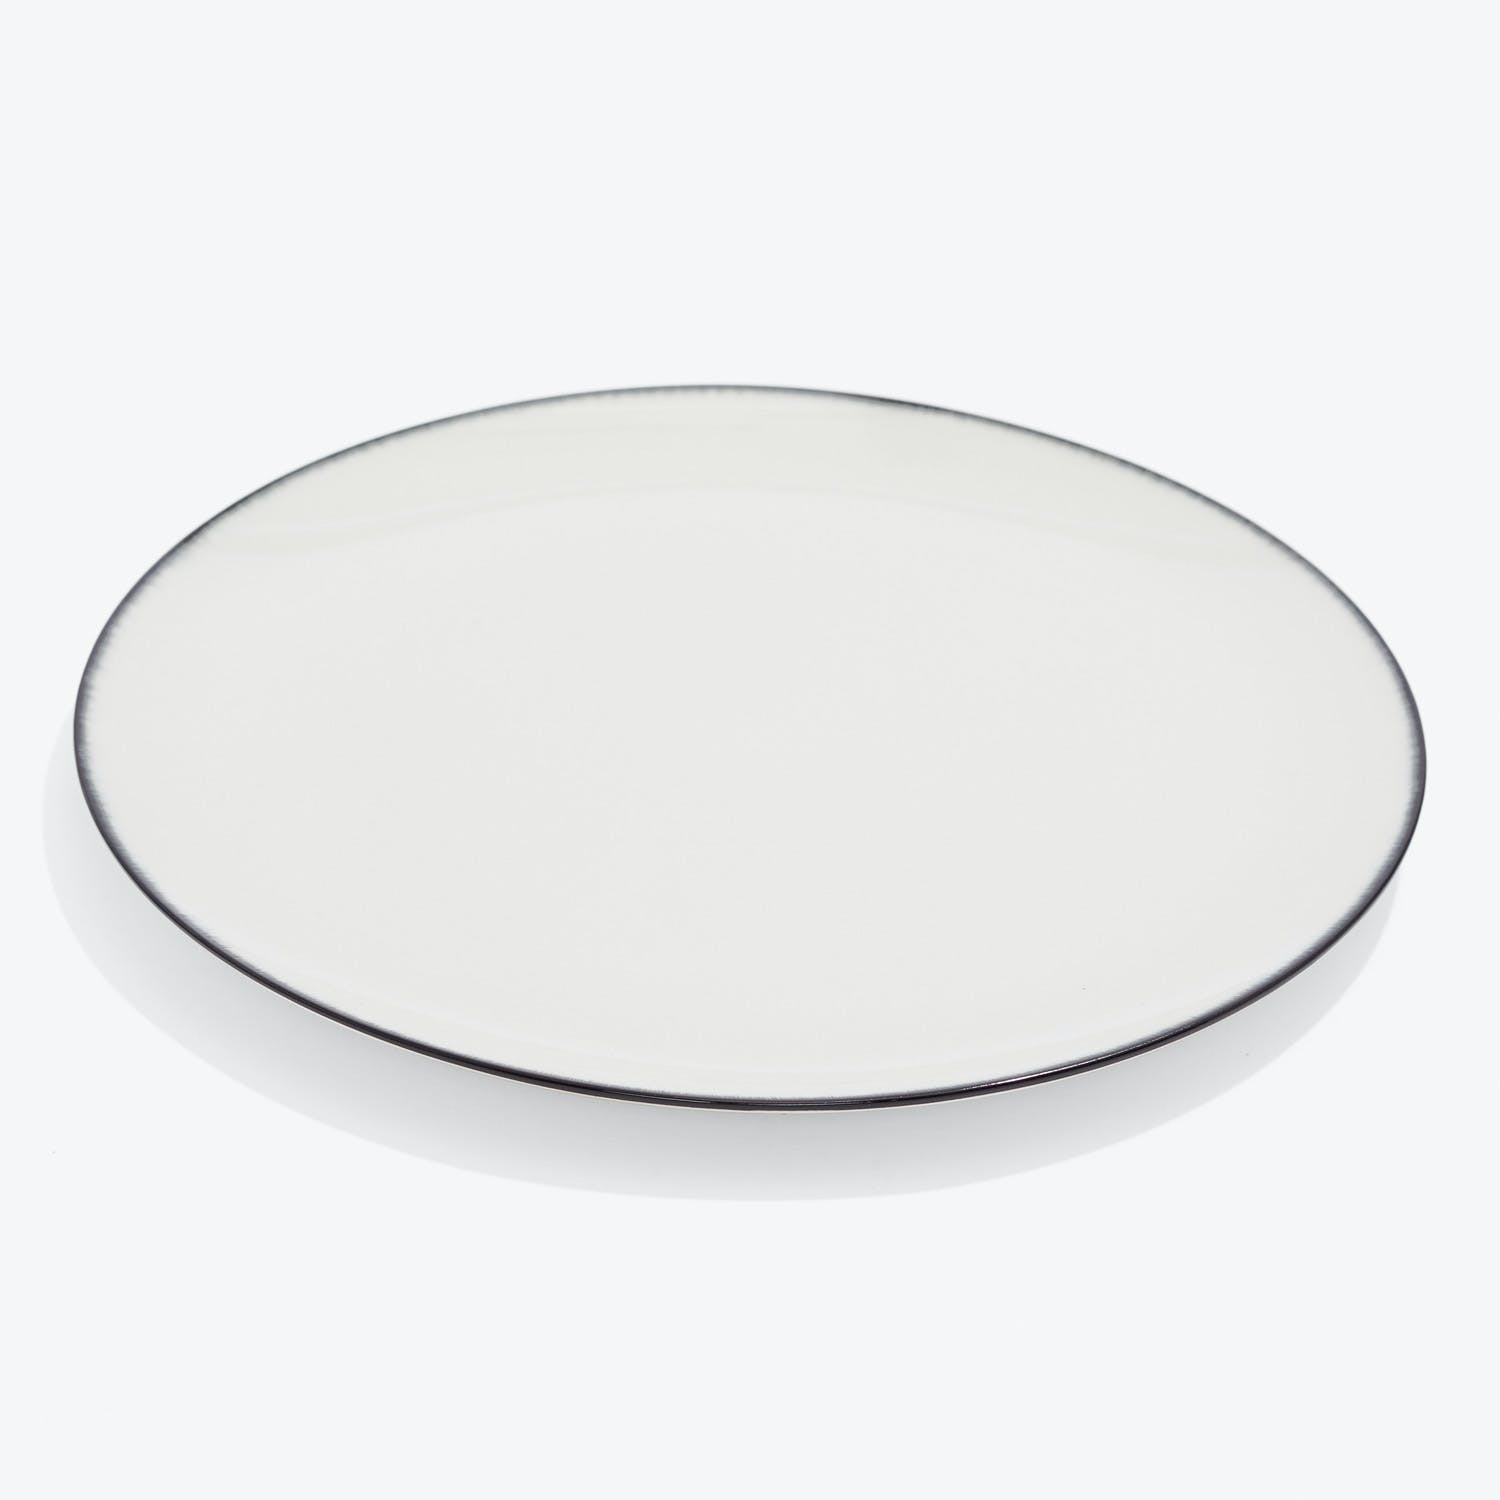 Minimalist white plate with black rim set against white background.